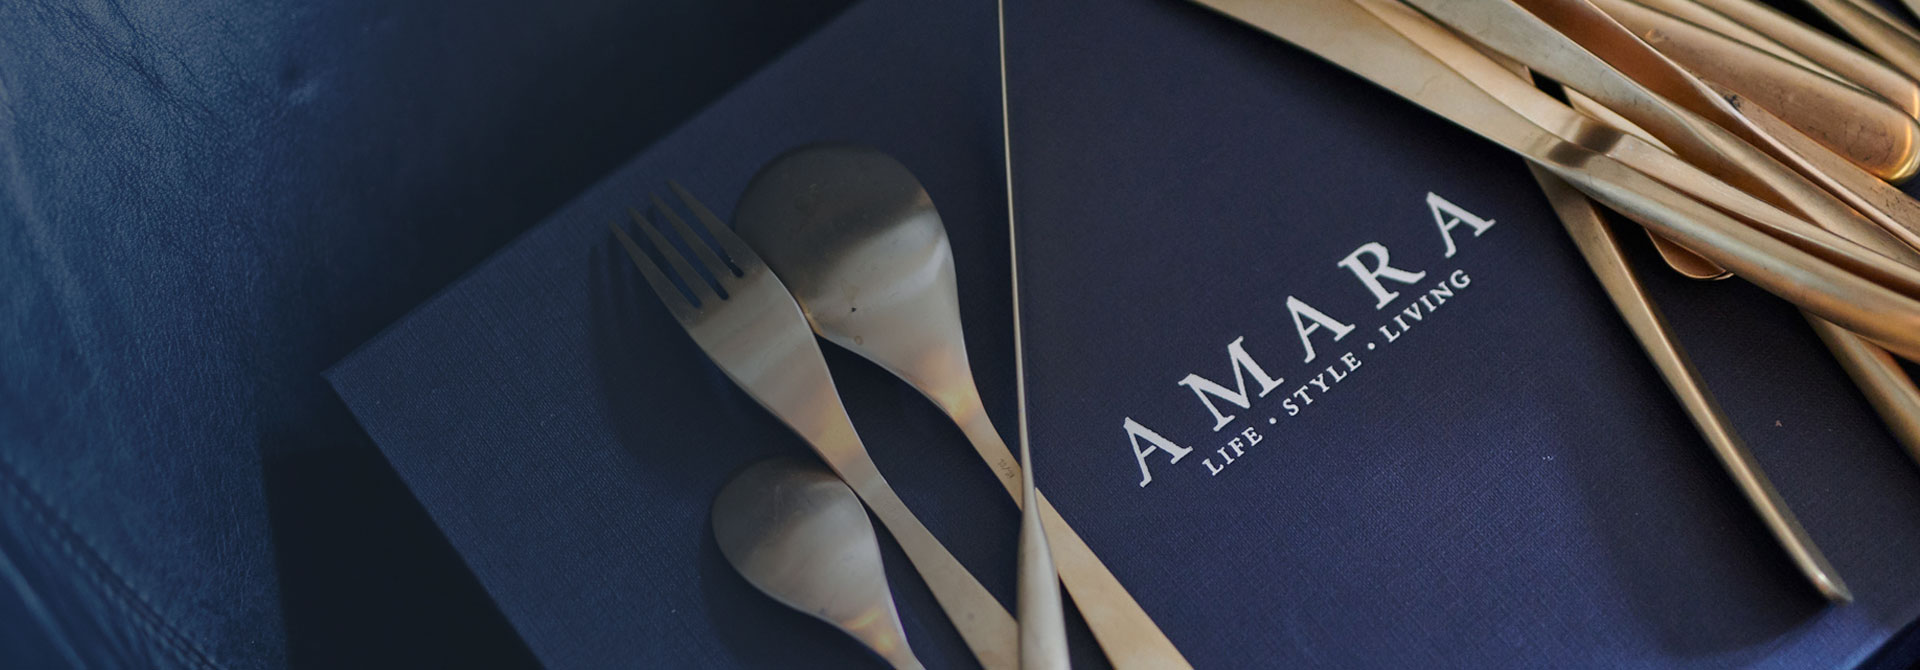 Amara cutlery set